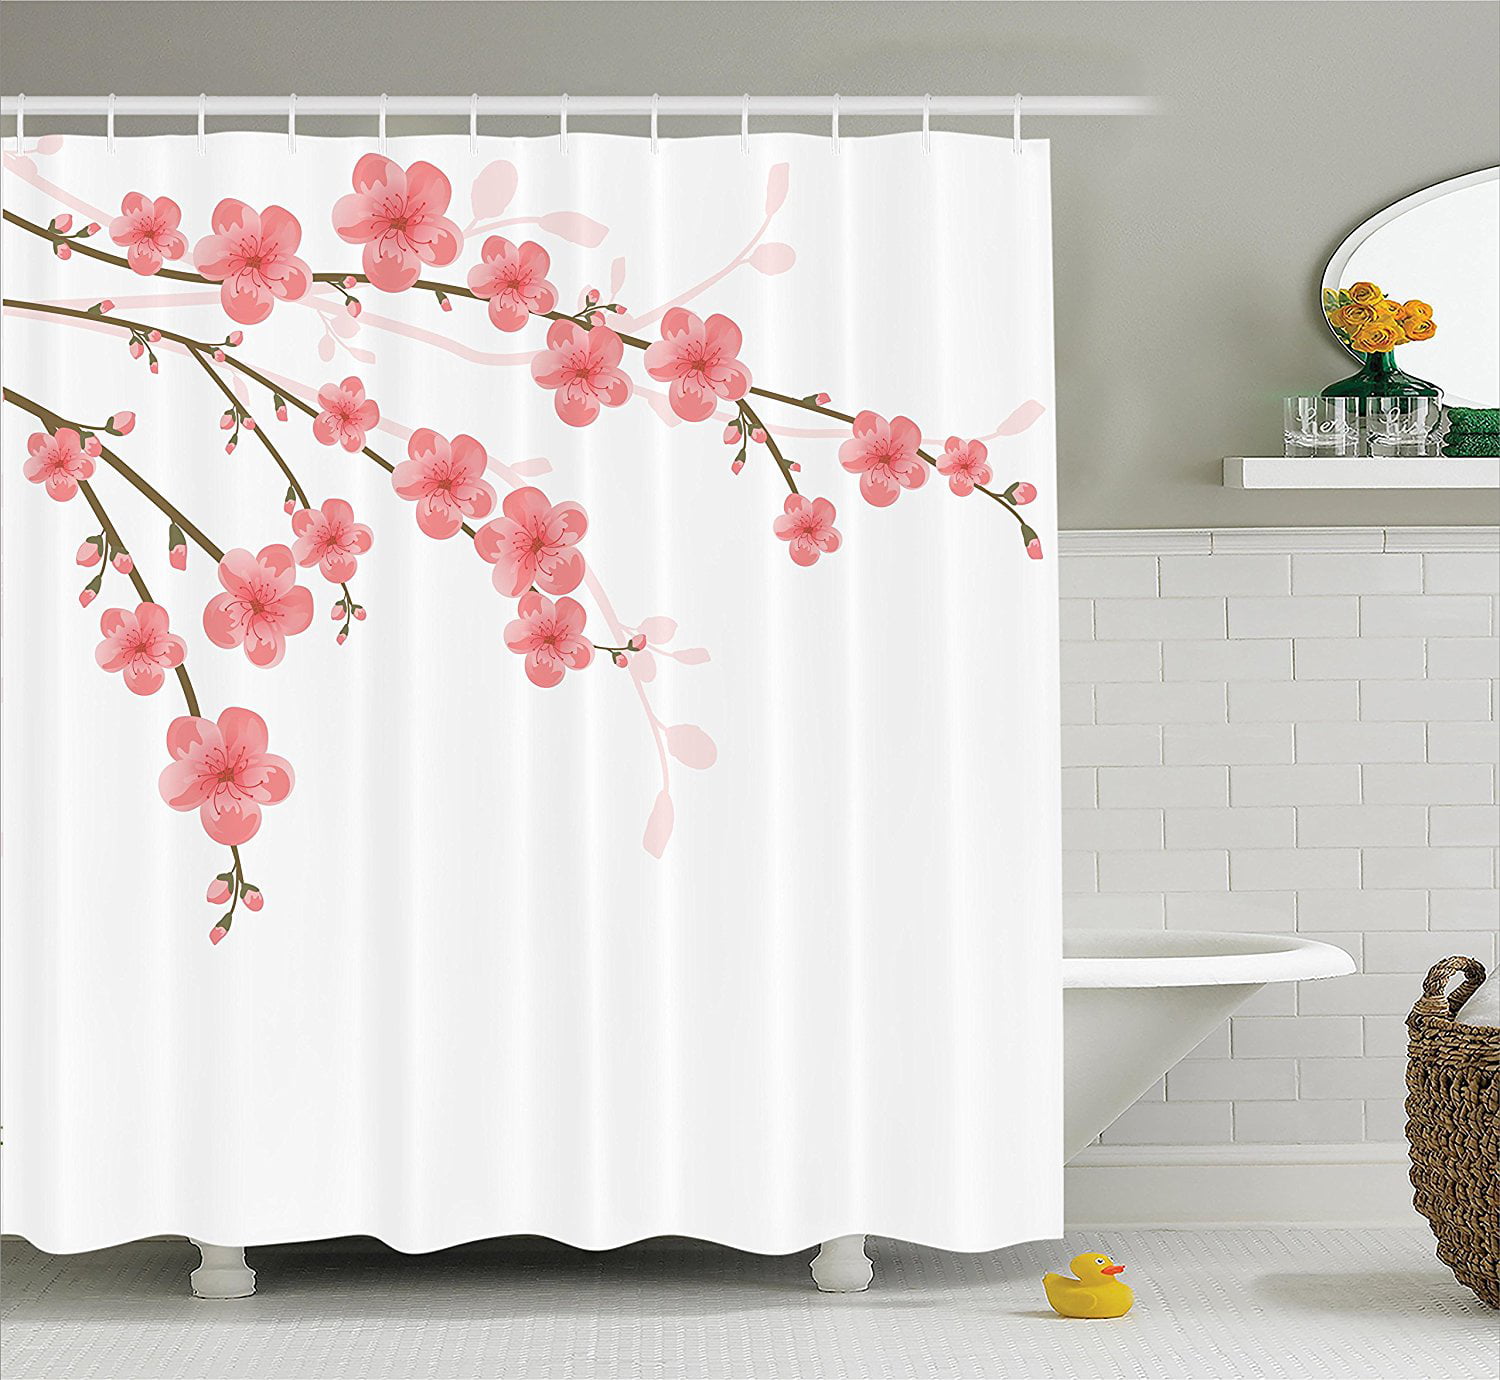 Disney Castle Waterproof Fabric Shower Curtain Bath Curtain With Hooks 70"*70” 